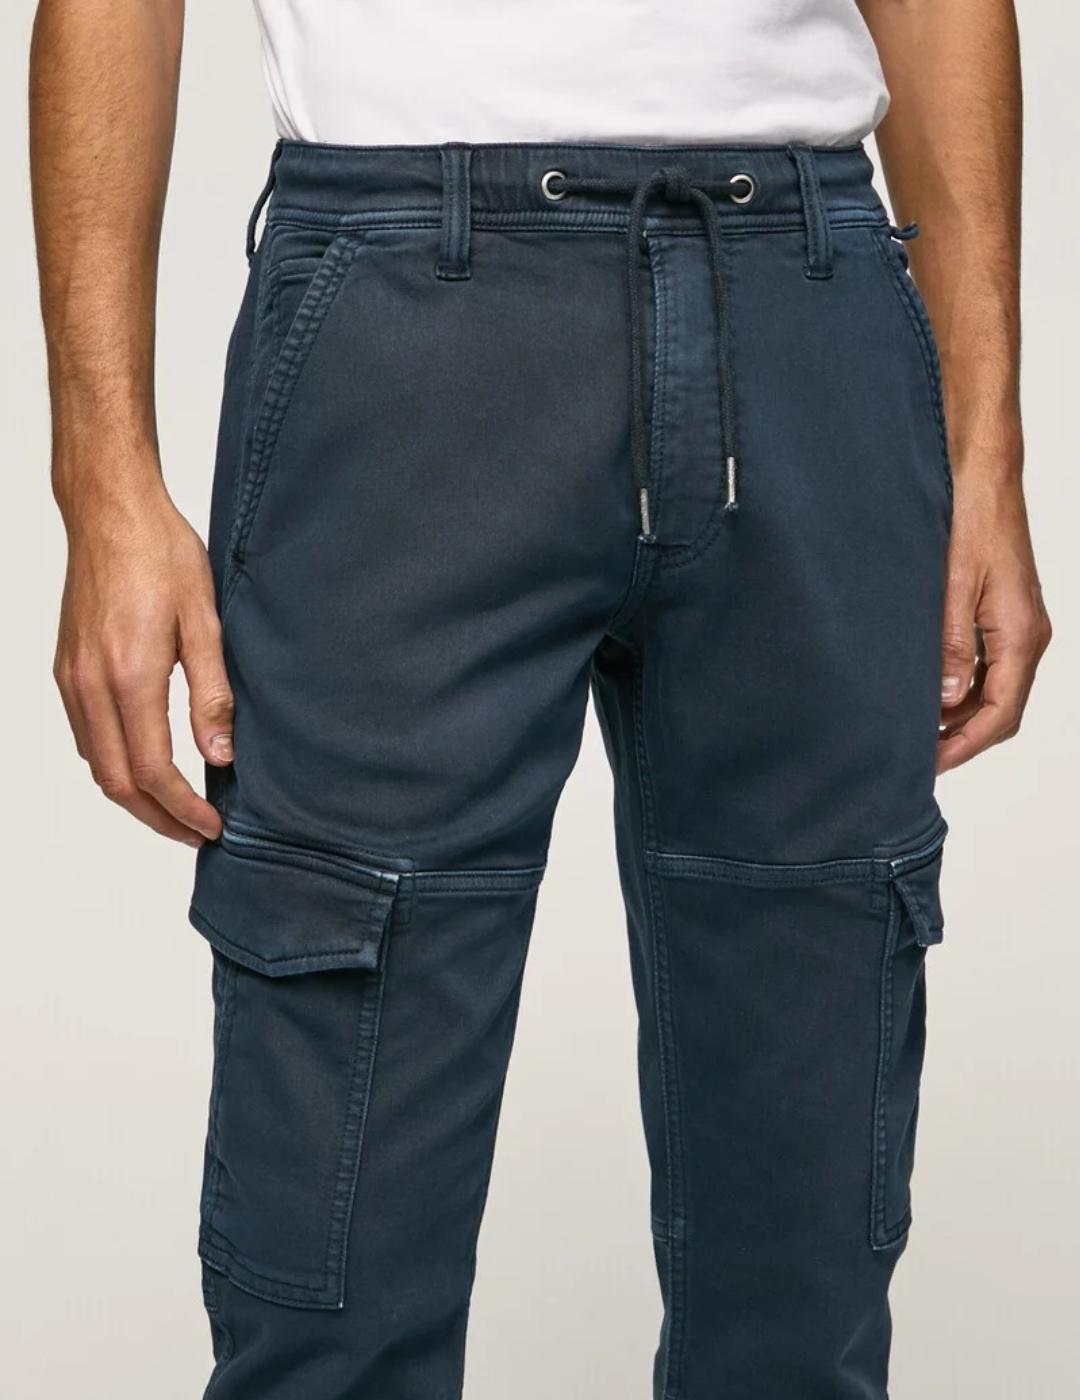 Pantalón azul hombre jogger Jared pepe jeans